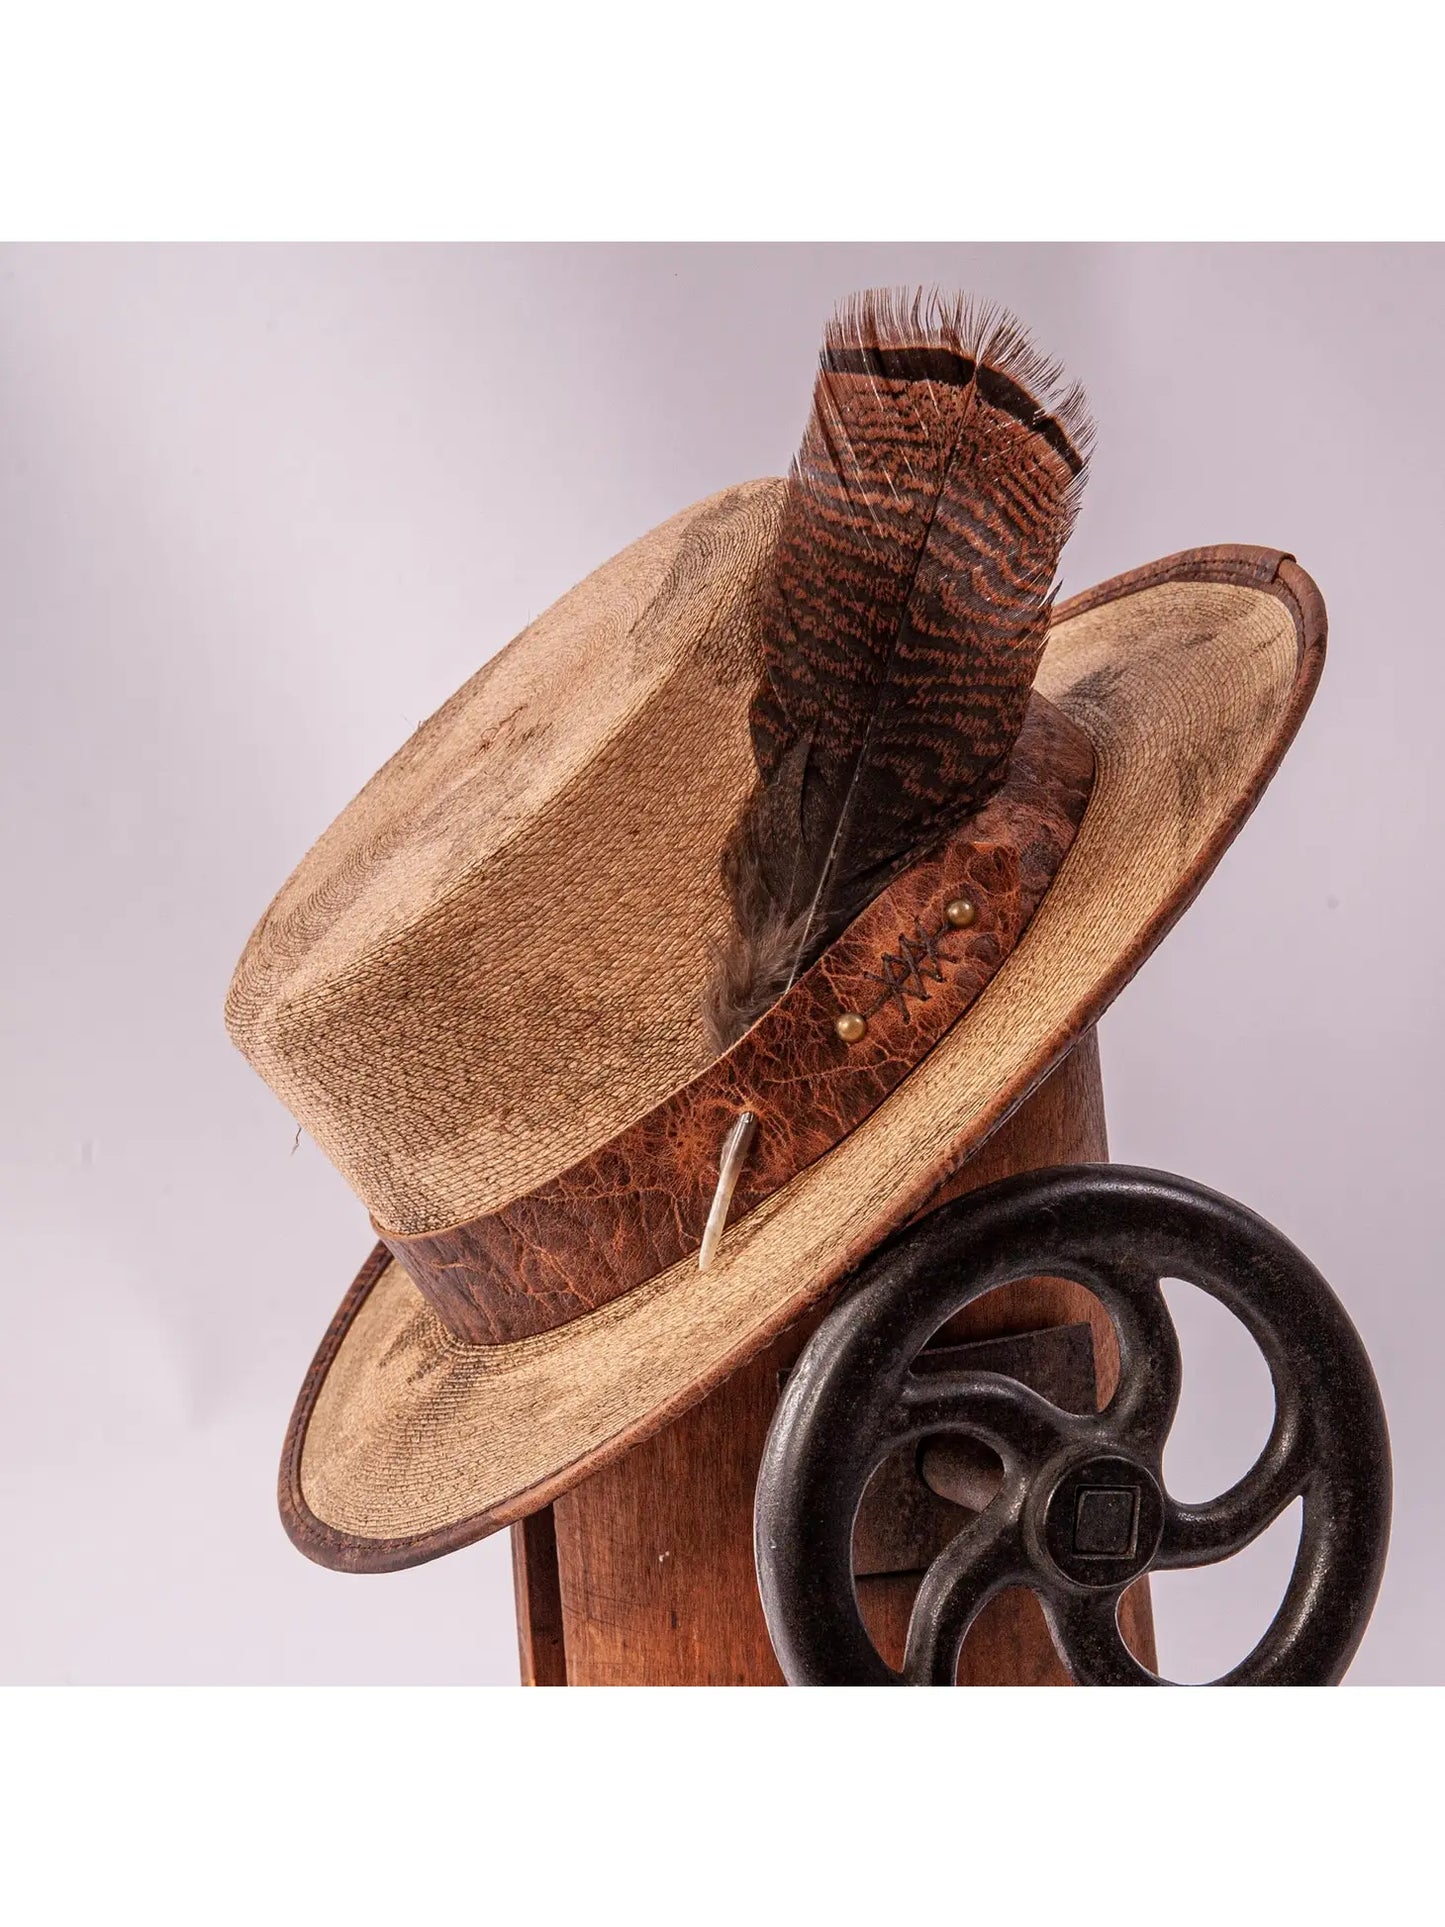 American Hat Makers, Palmetto